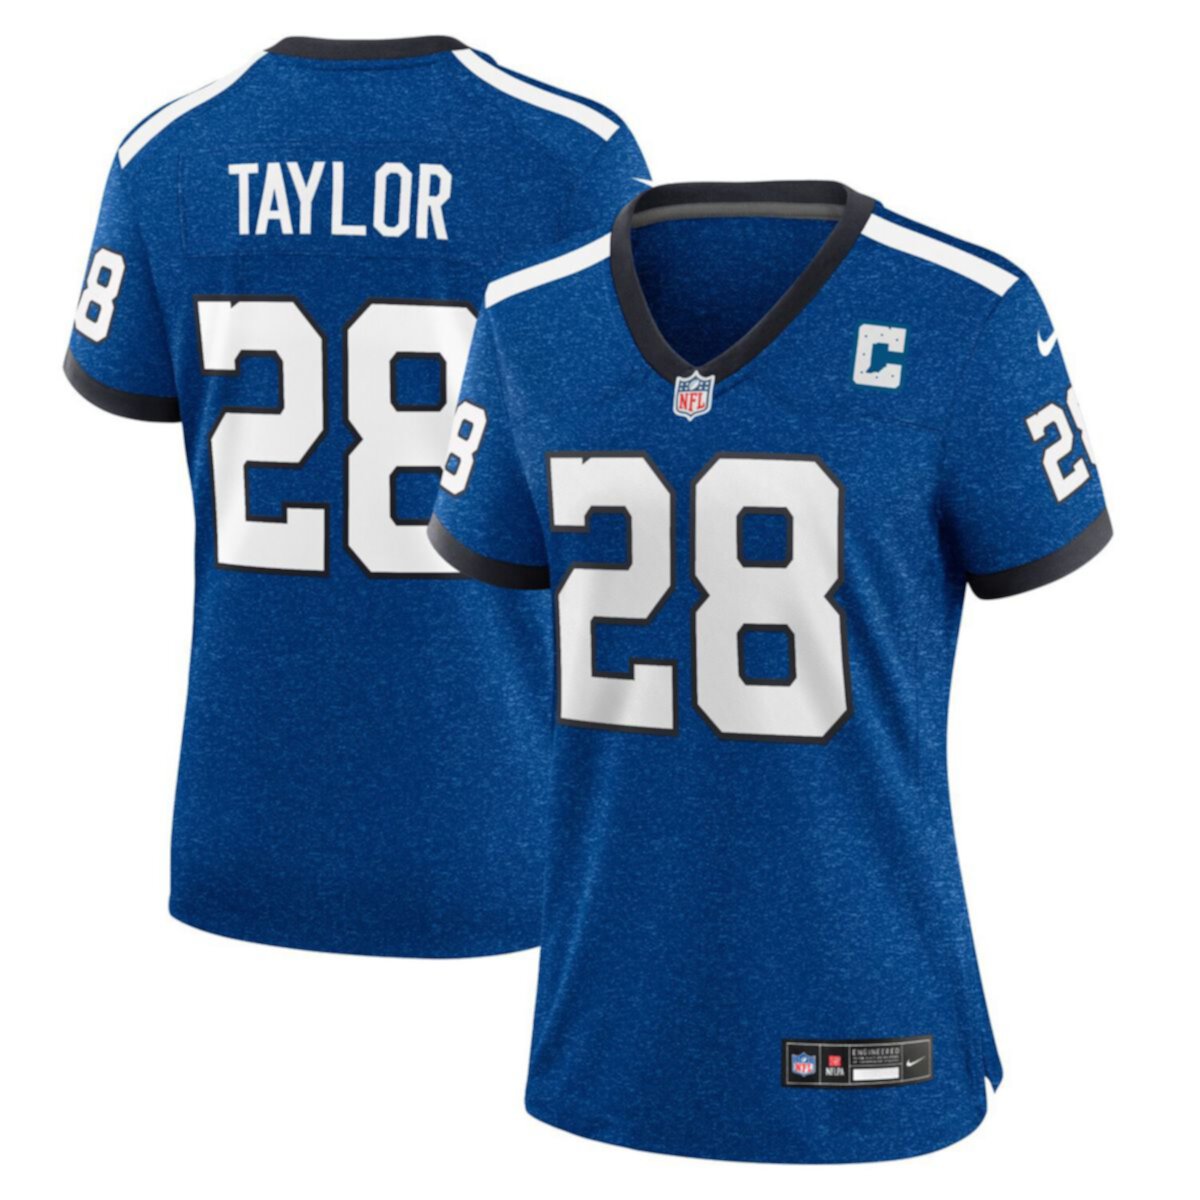 Women's Nike Jonathan Taylor Blue Indianapolis Colts Player Jersey Nitro USA